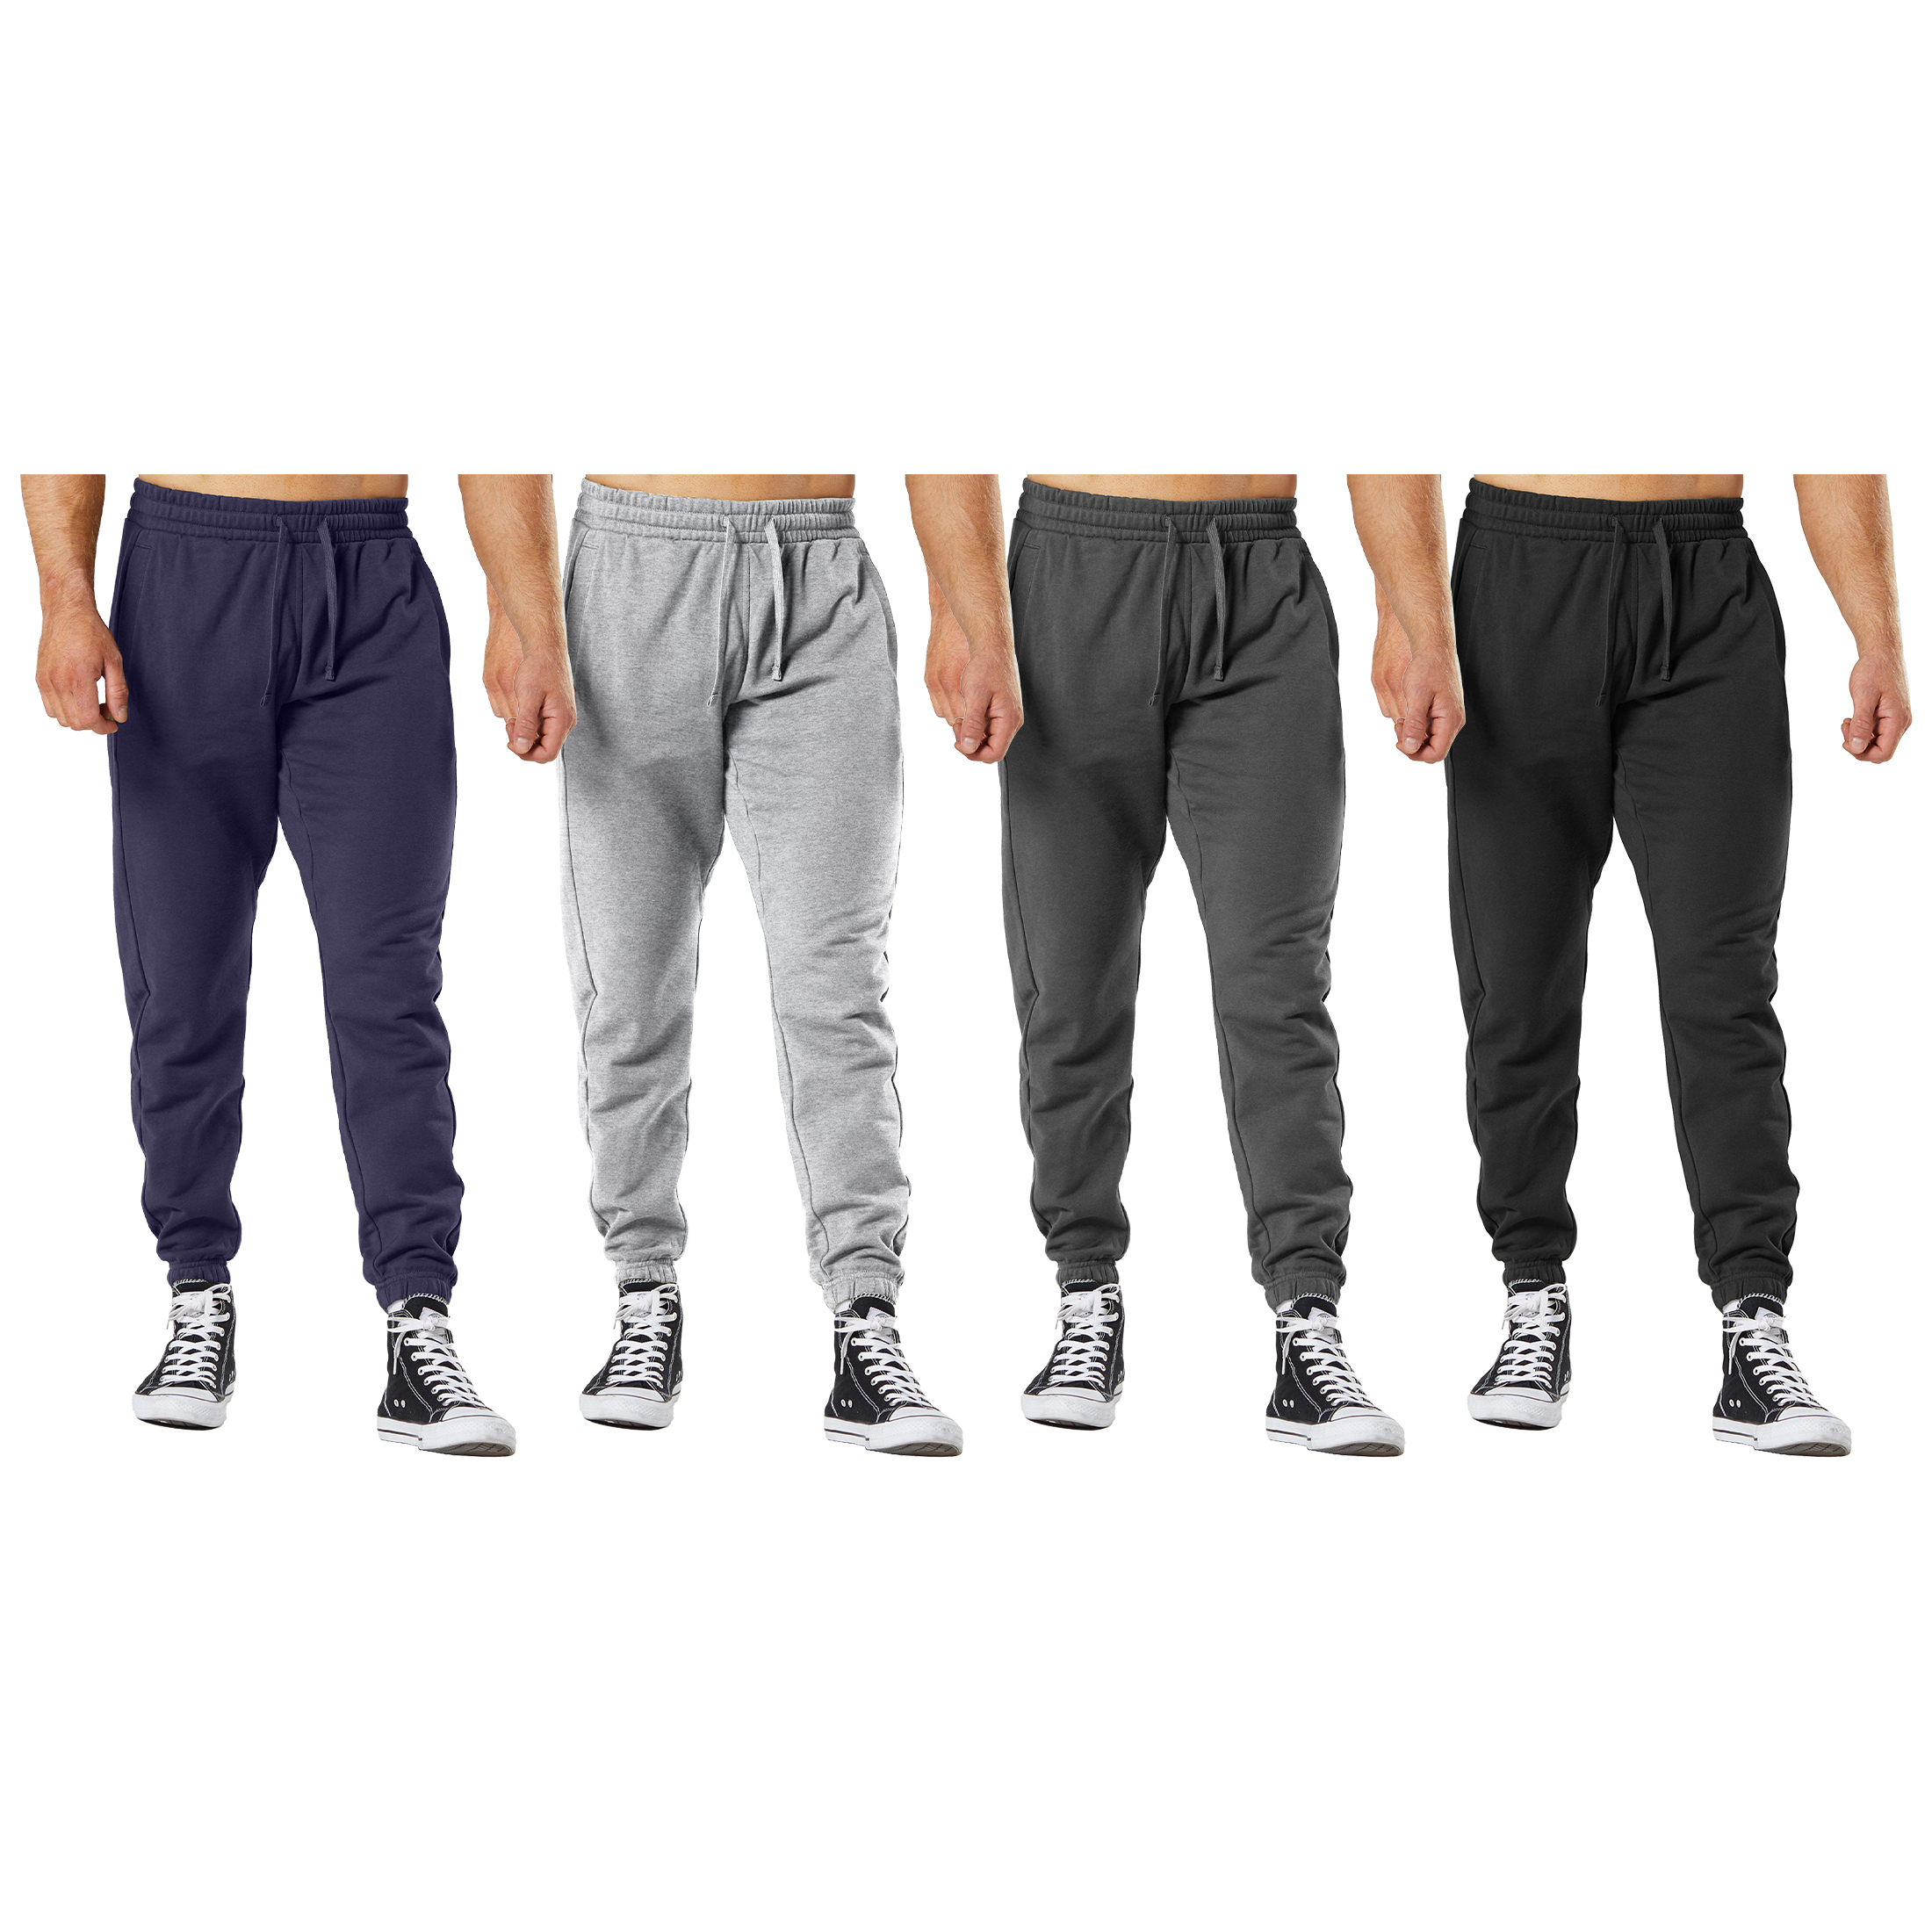 2-Pack: Men's Casual Fleece-Lined Elastic Bottom Jogger Pants With Pockets - Medium